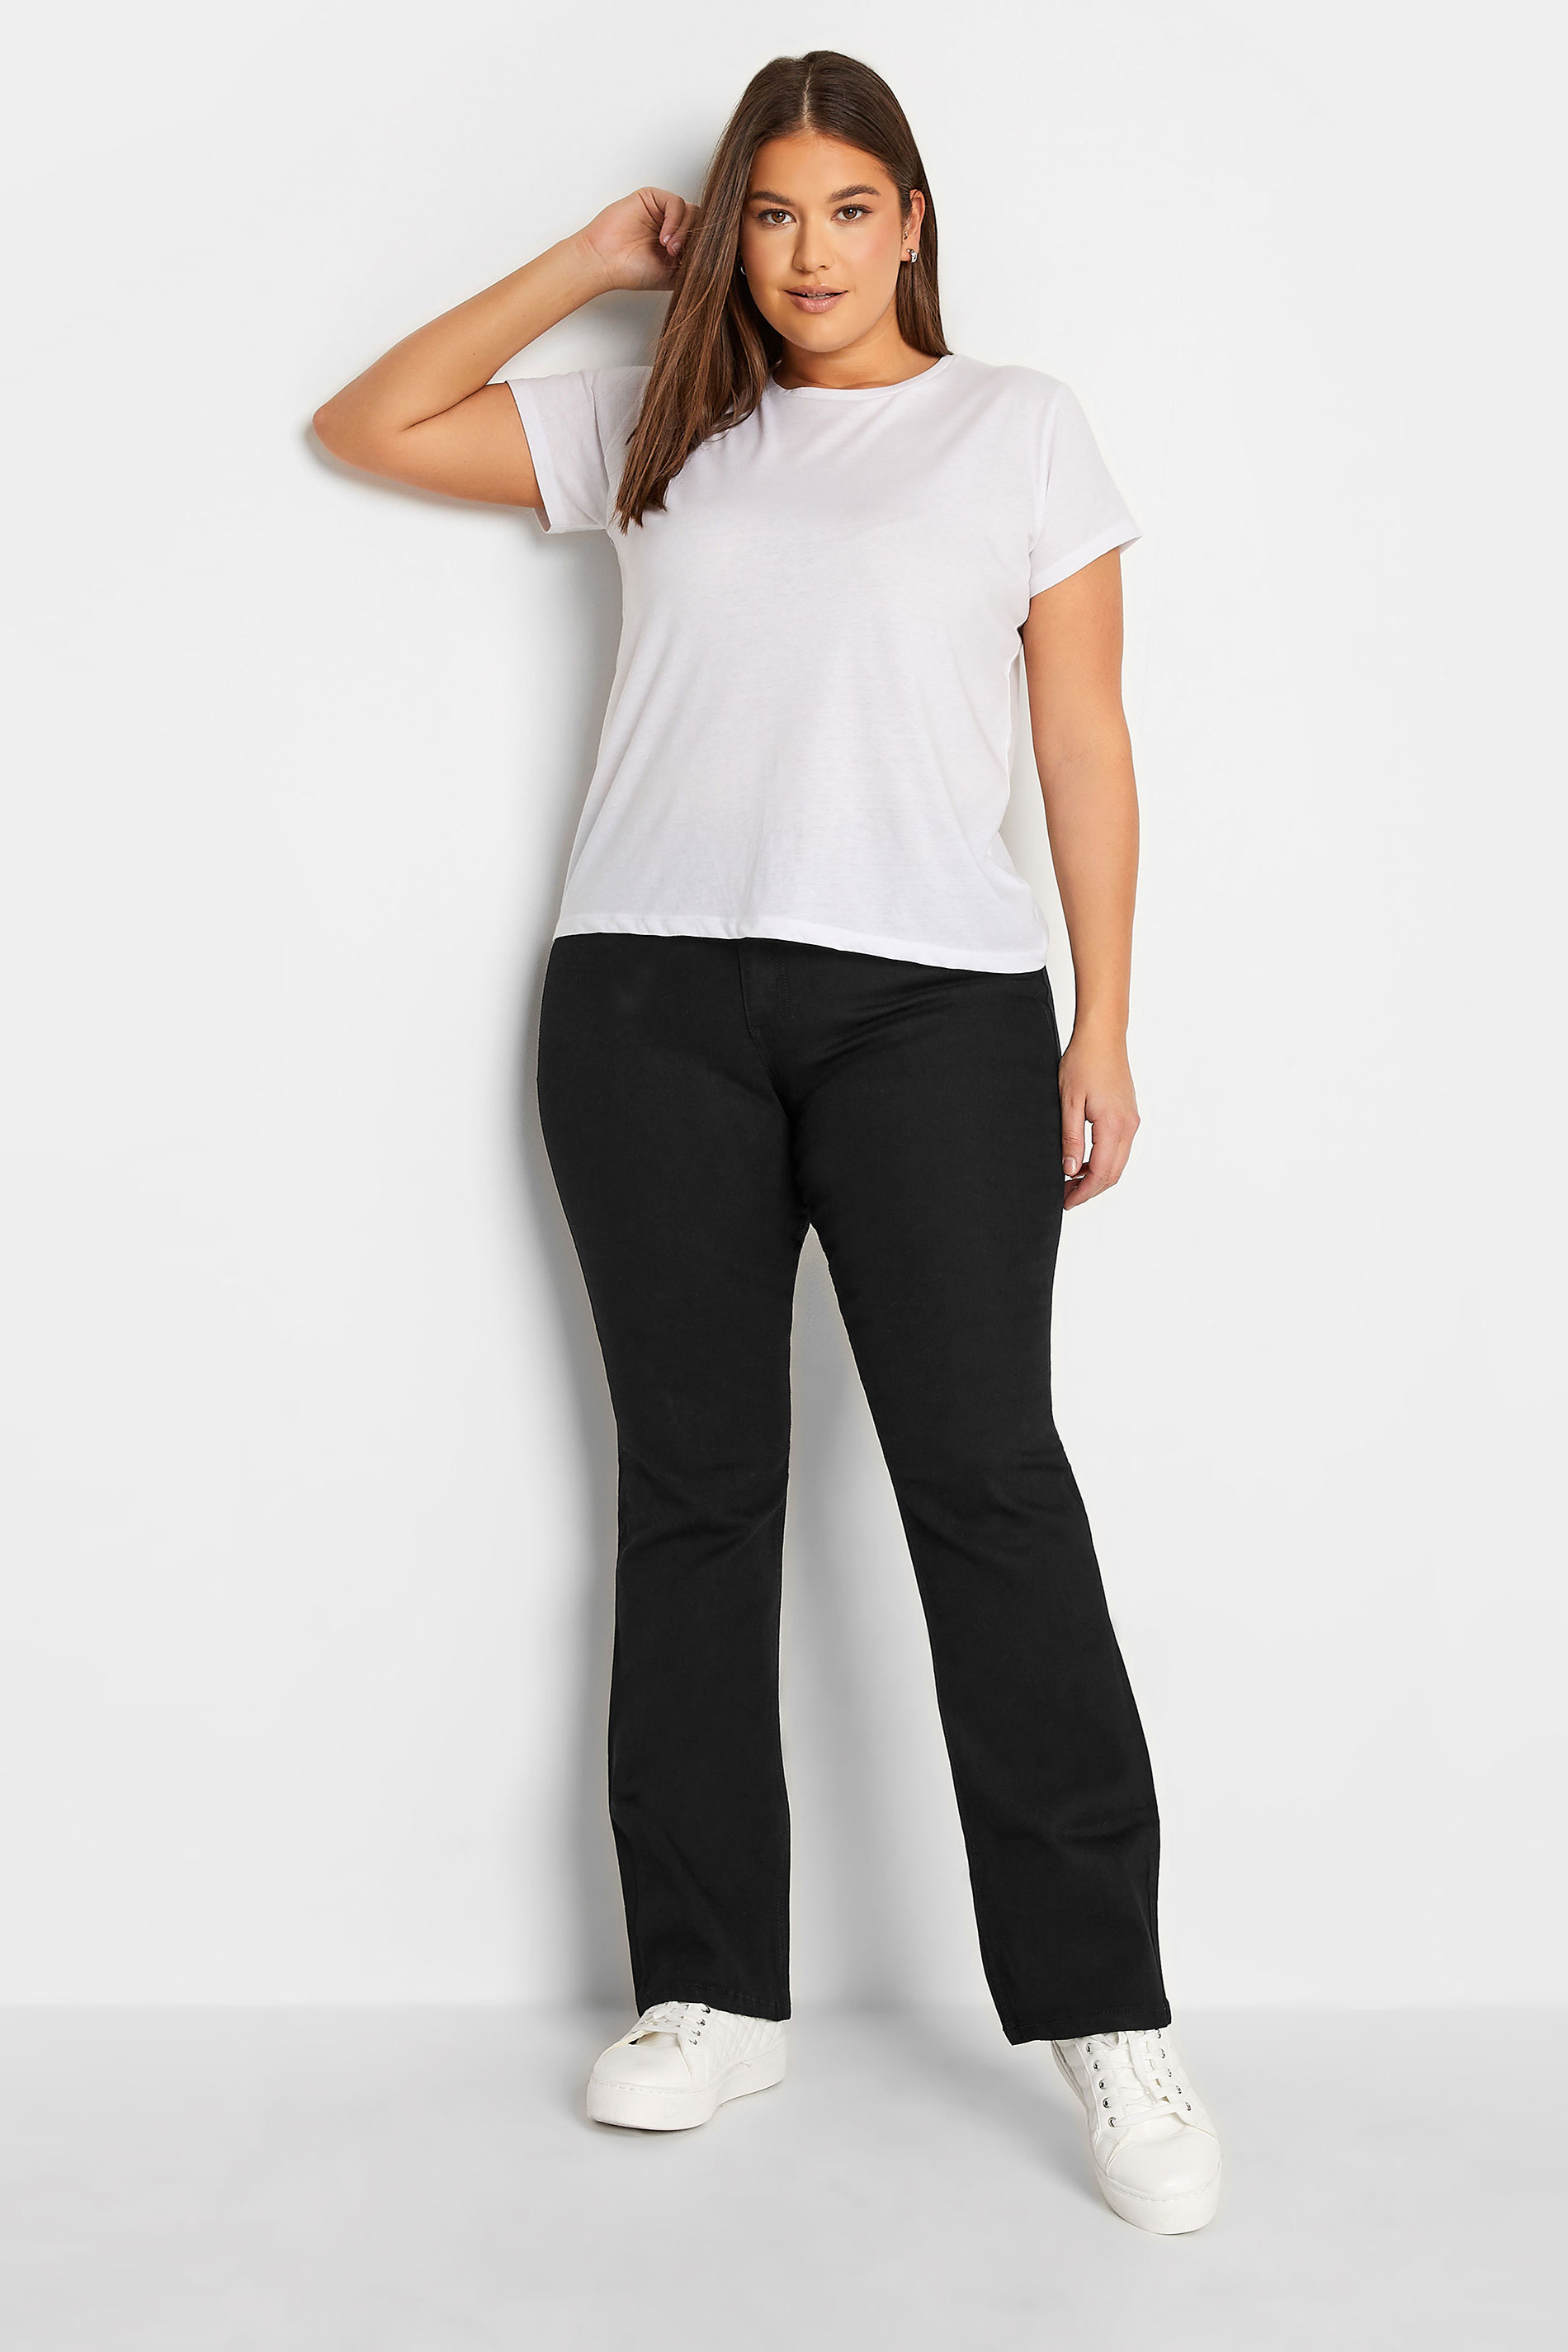 LTS Black RAE Bootcut Jeans | Long Tall Sally 2